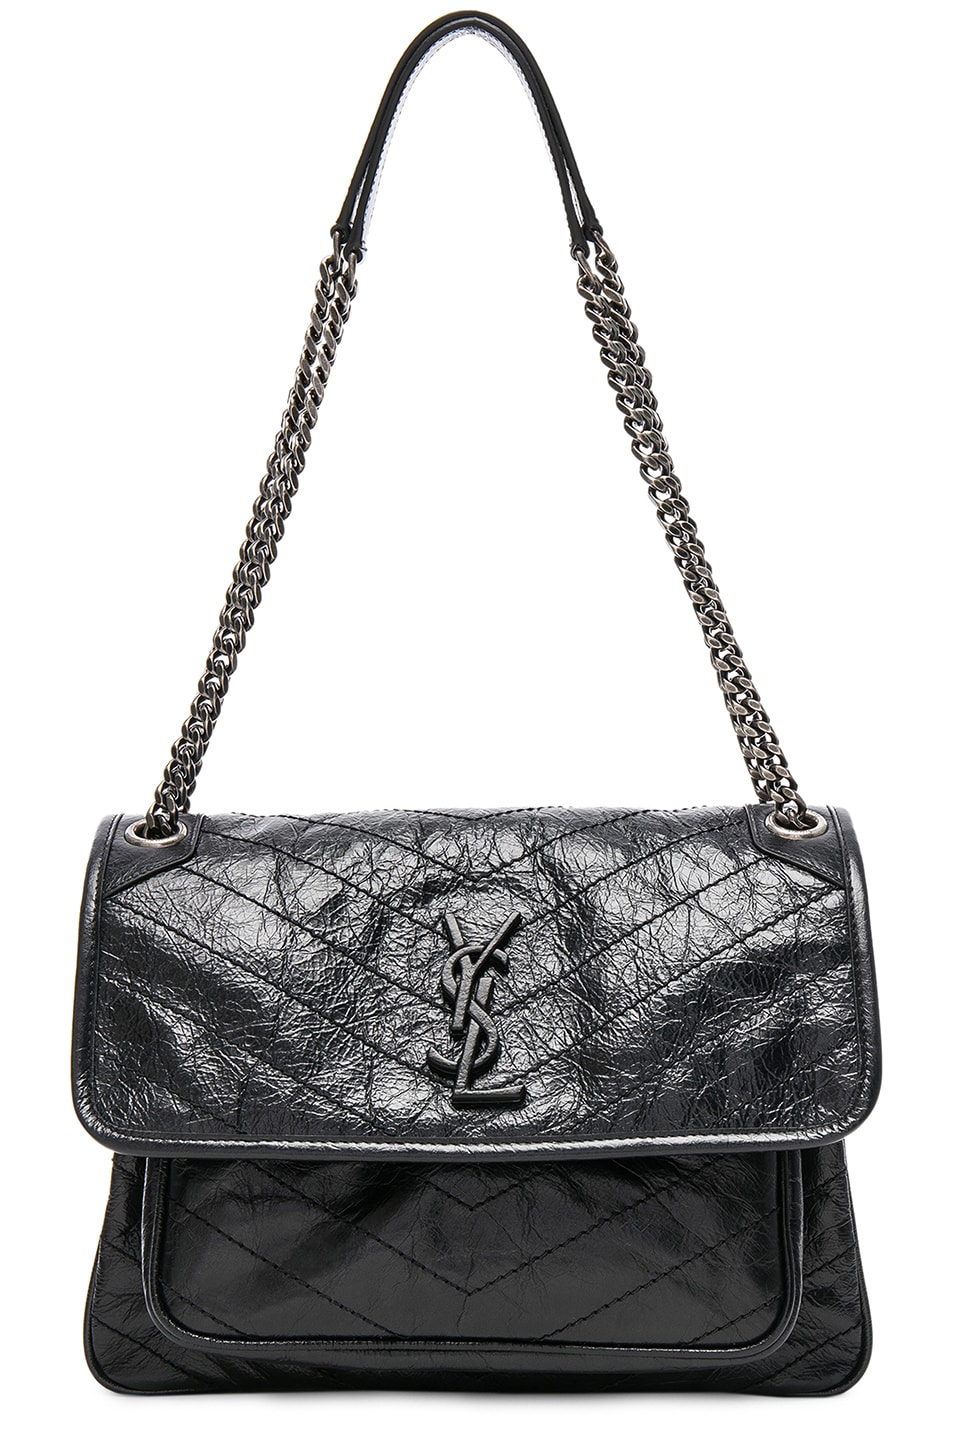 Saint Laurent Medium Niki Monogramme Chain Bag in Black | FWRD